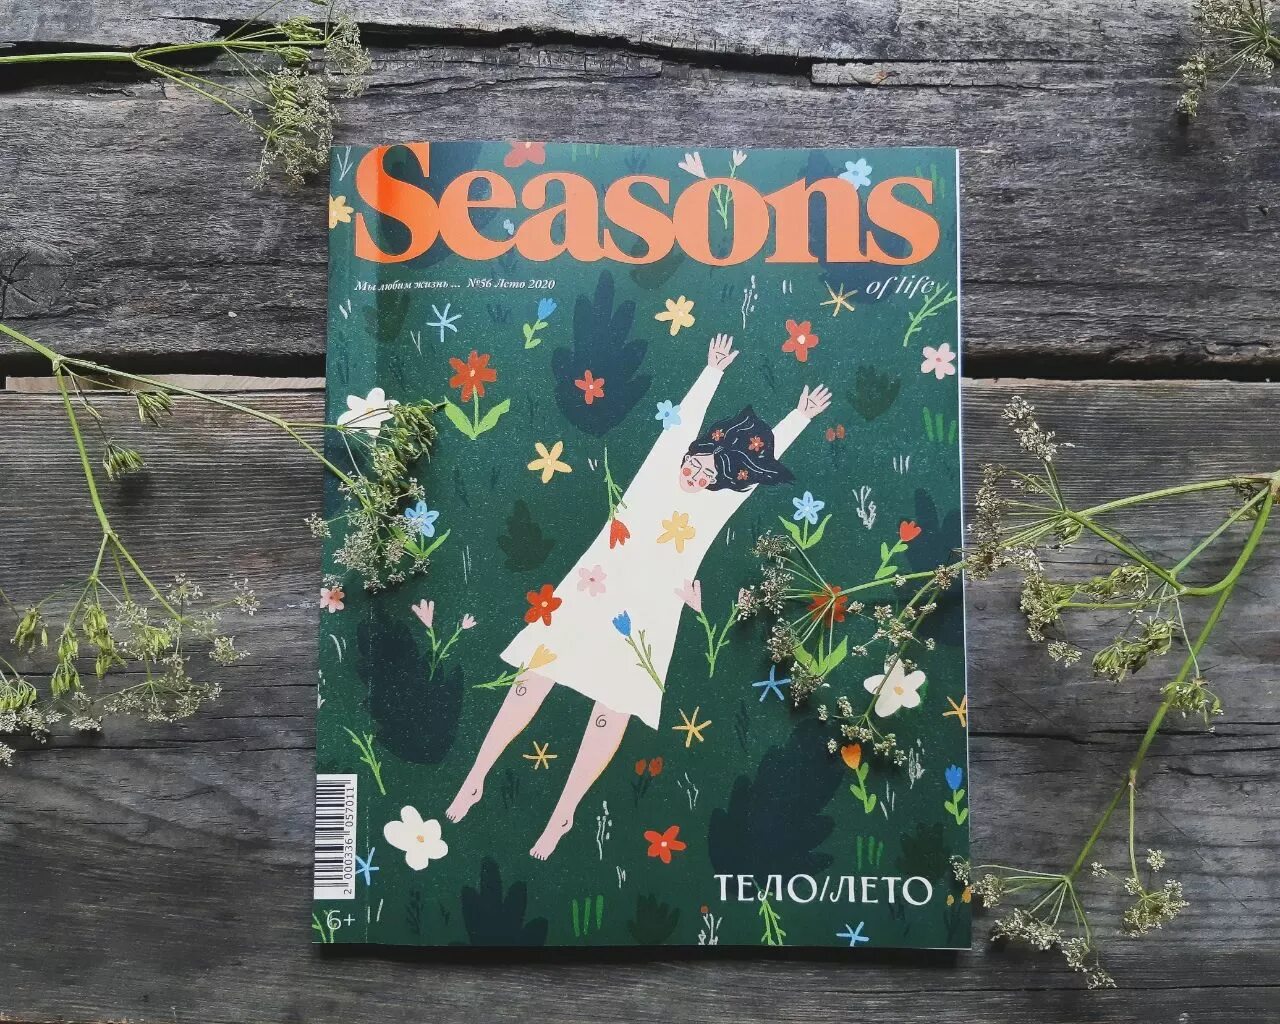 Seasons of Life журнал. Seasons обложки. Журнал Сизонс обложки. Обложка журнала лето. Seasons 2020